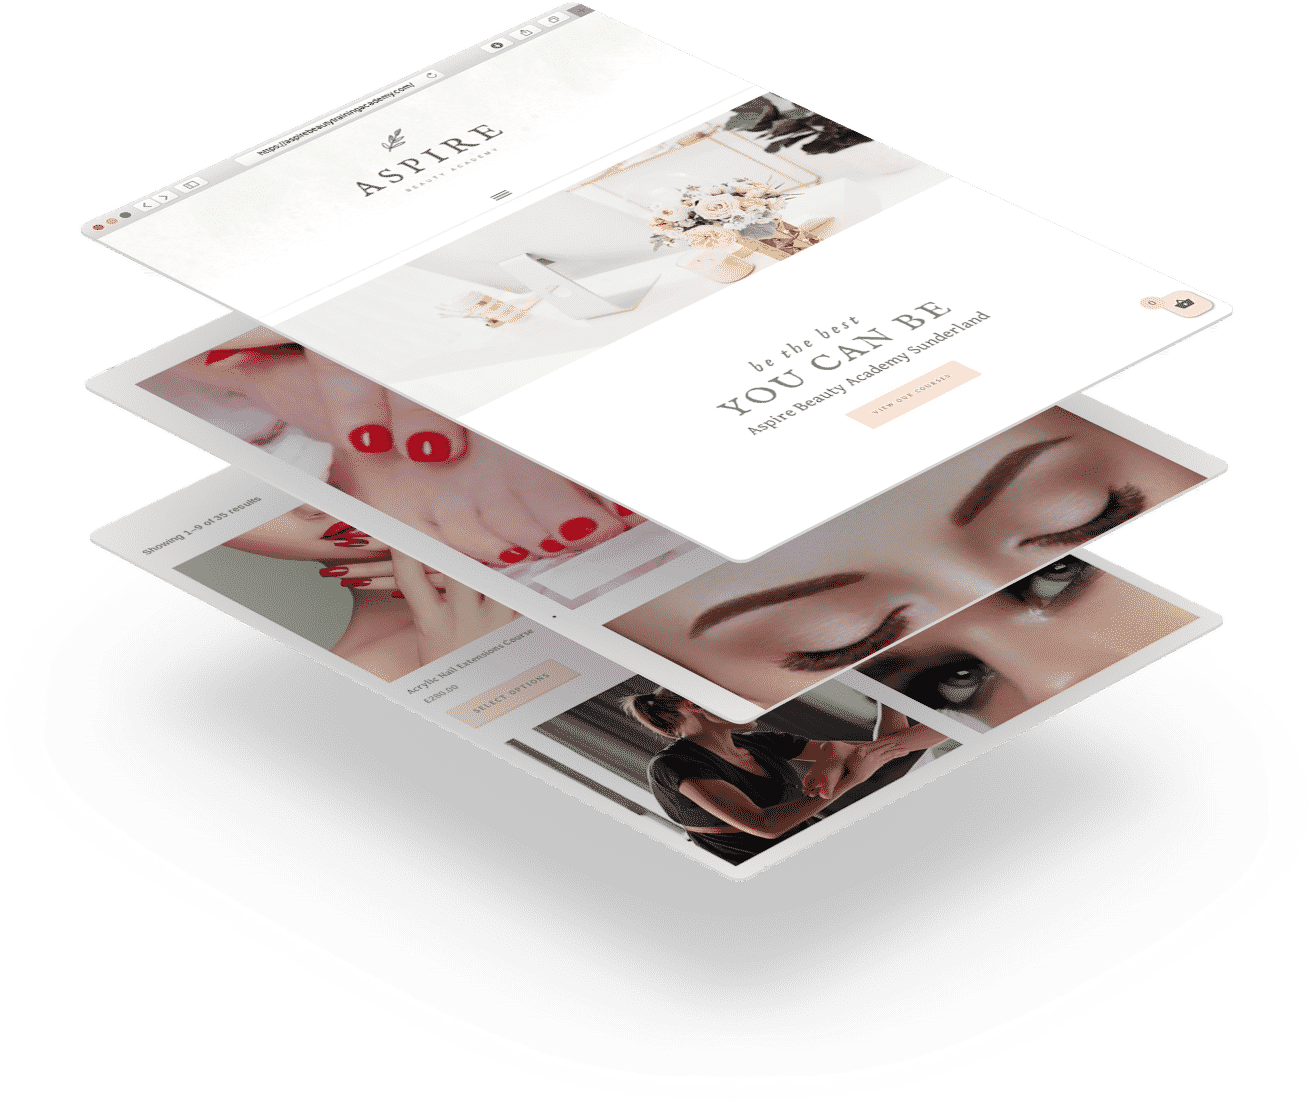 Aspire Beauty Academy - Multiple Screenshots of Web Design